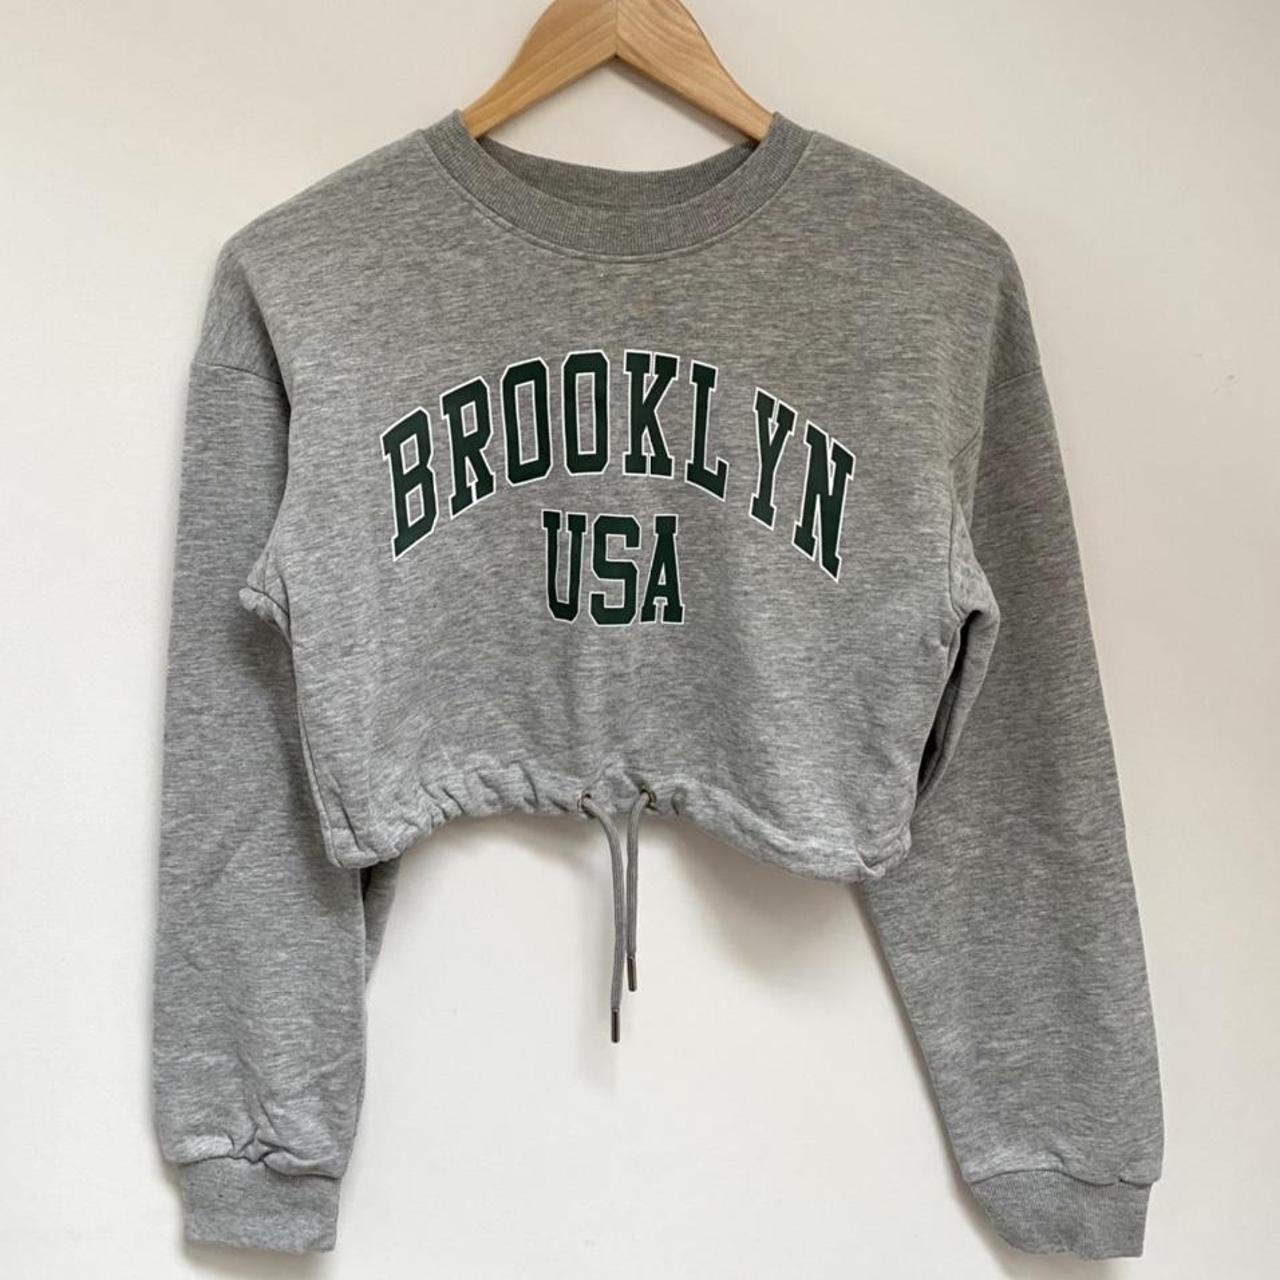 Bershka Brooklyn USA sweatshirt :) Size: XS Colour:... - Depop